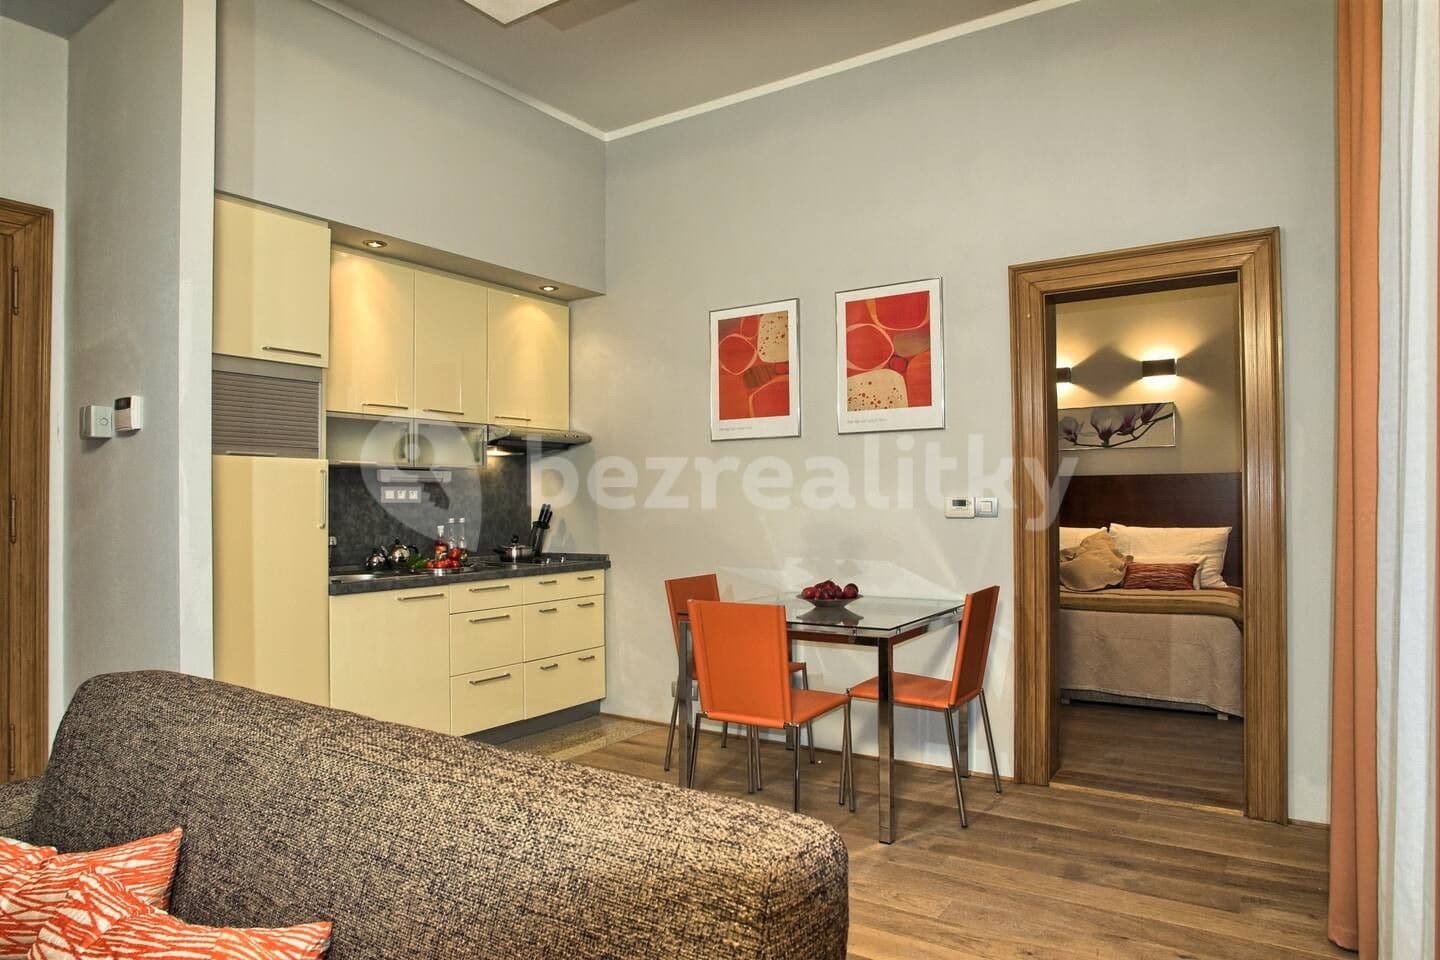 1 bedroom with open-plan kitchen flat to rent, 44 m², Rybná, Prague, Prague